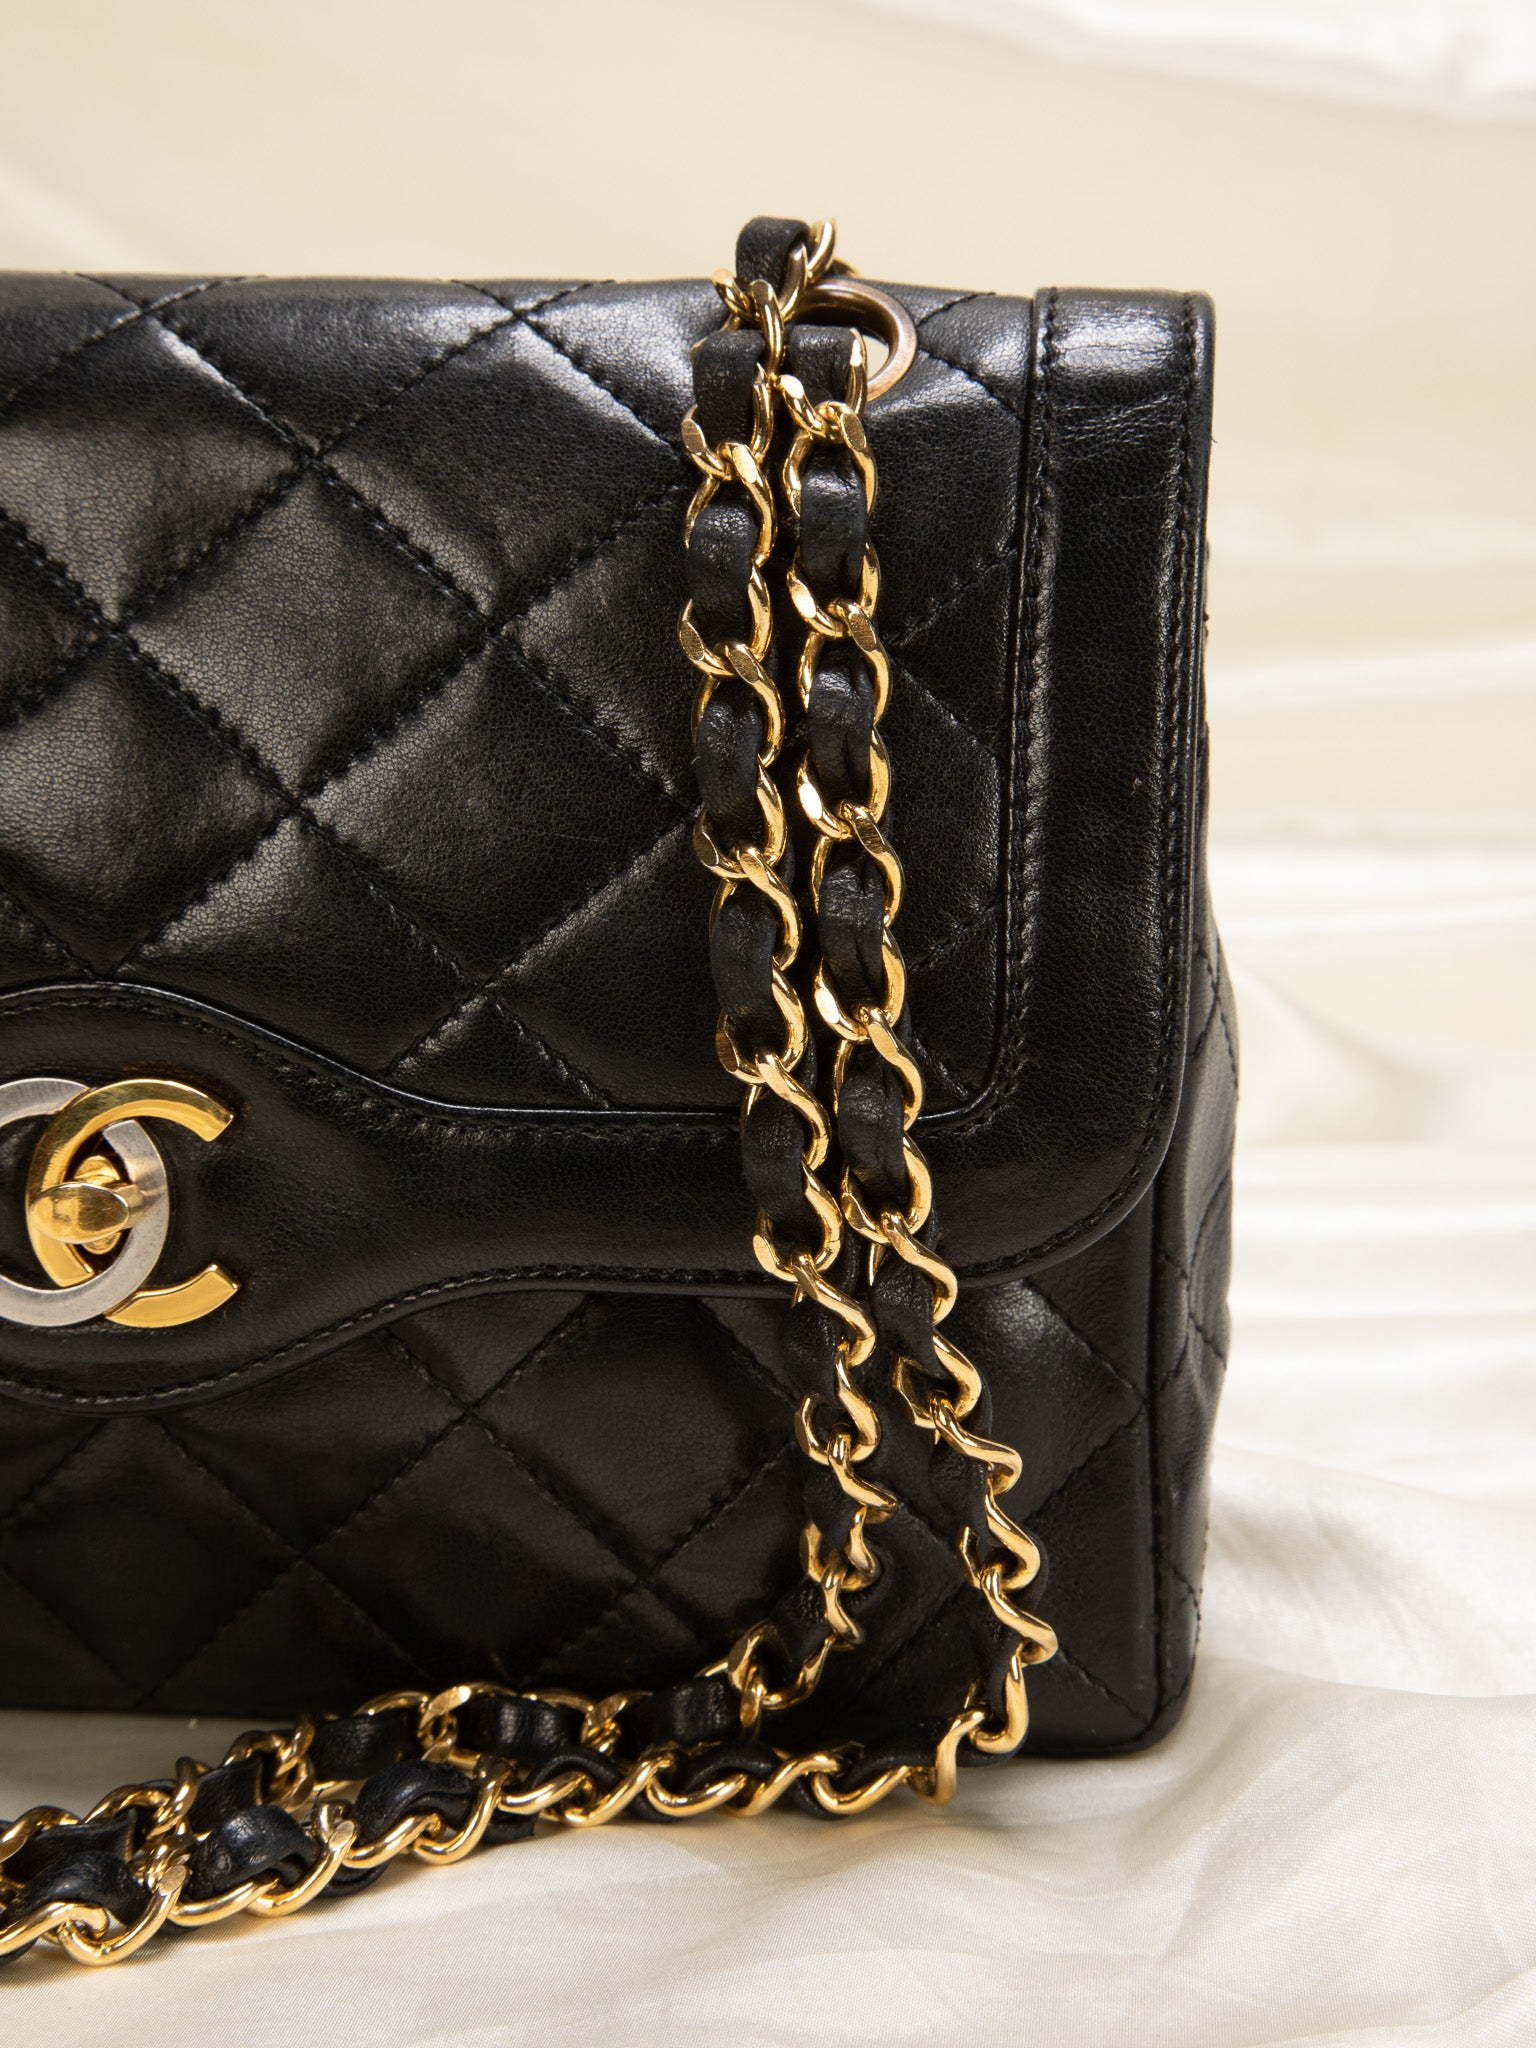 Chanel Lambskin Two-Tone Flap Bag